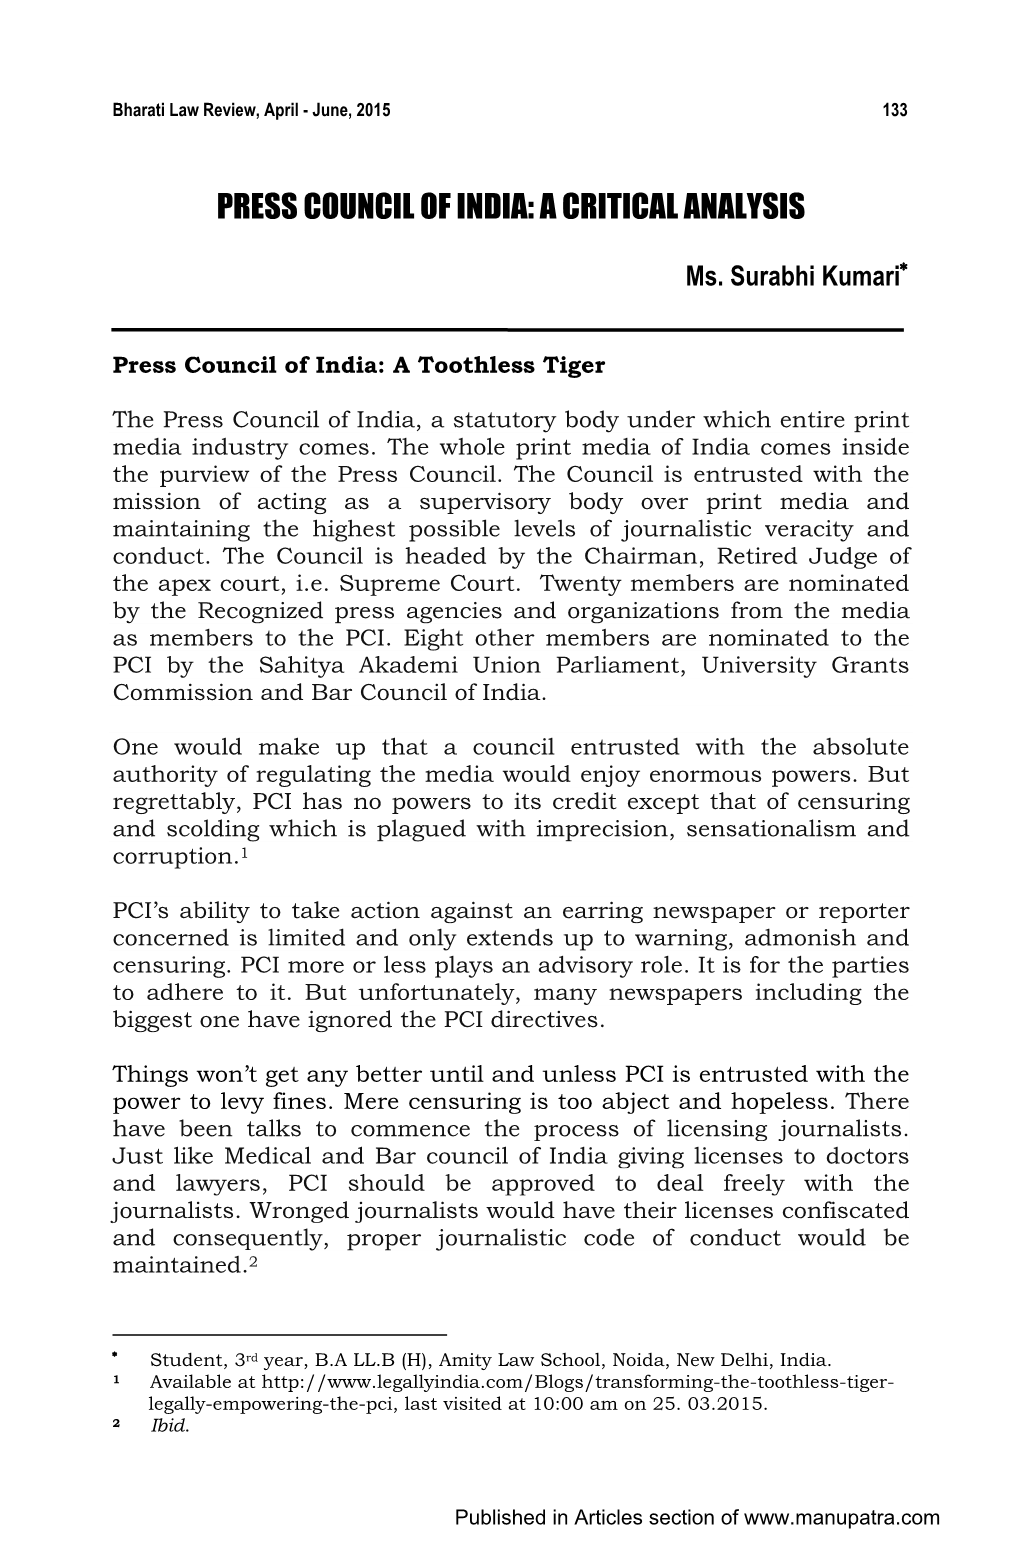 Press Council of India: a Critical Analysis